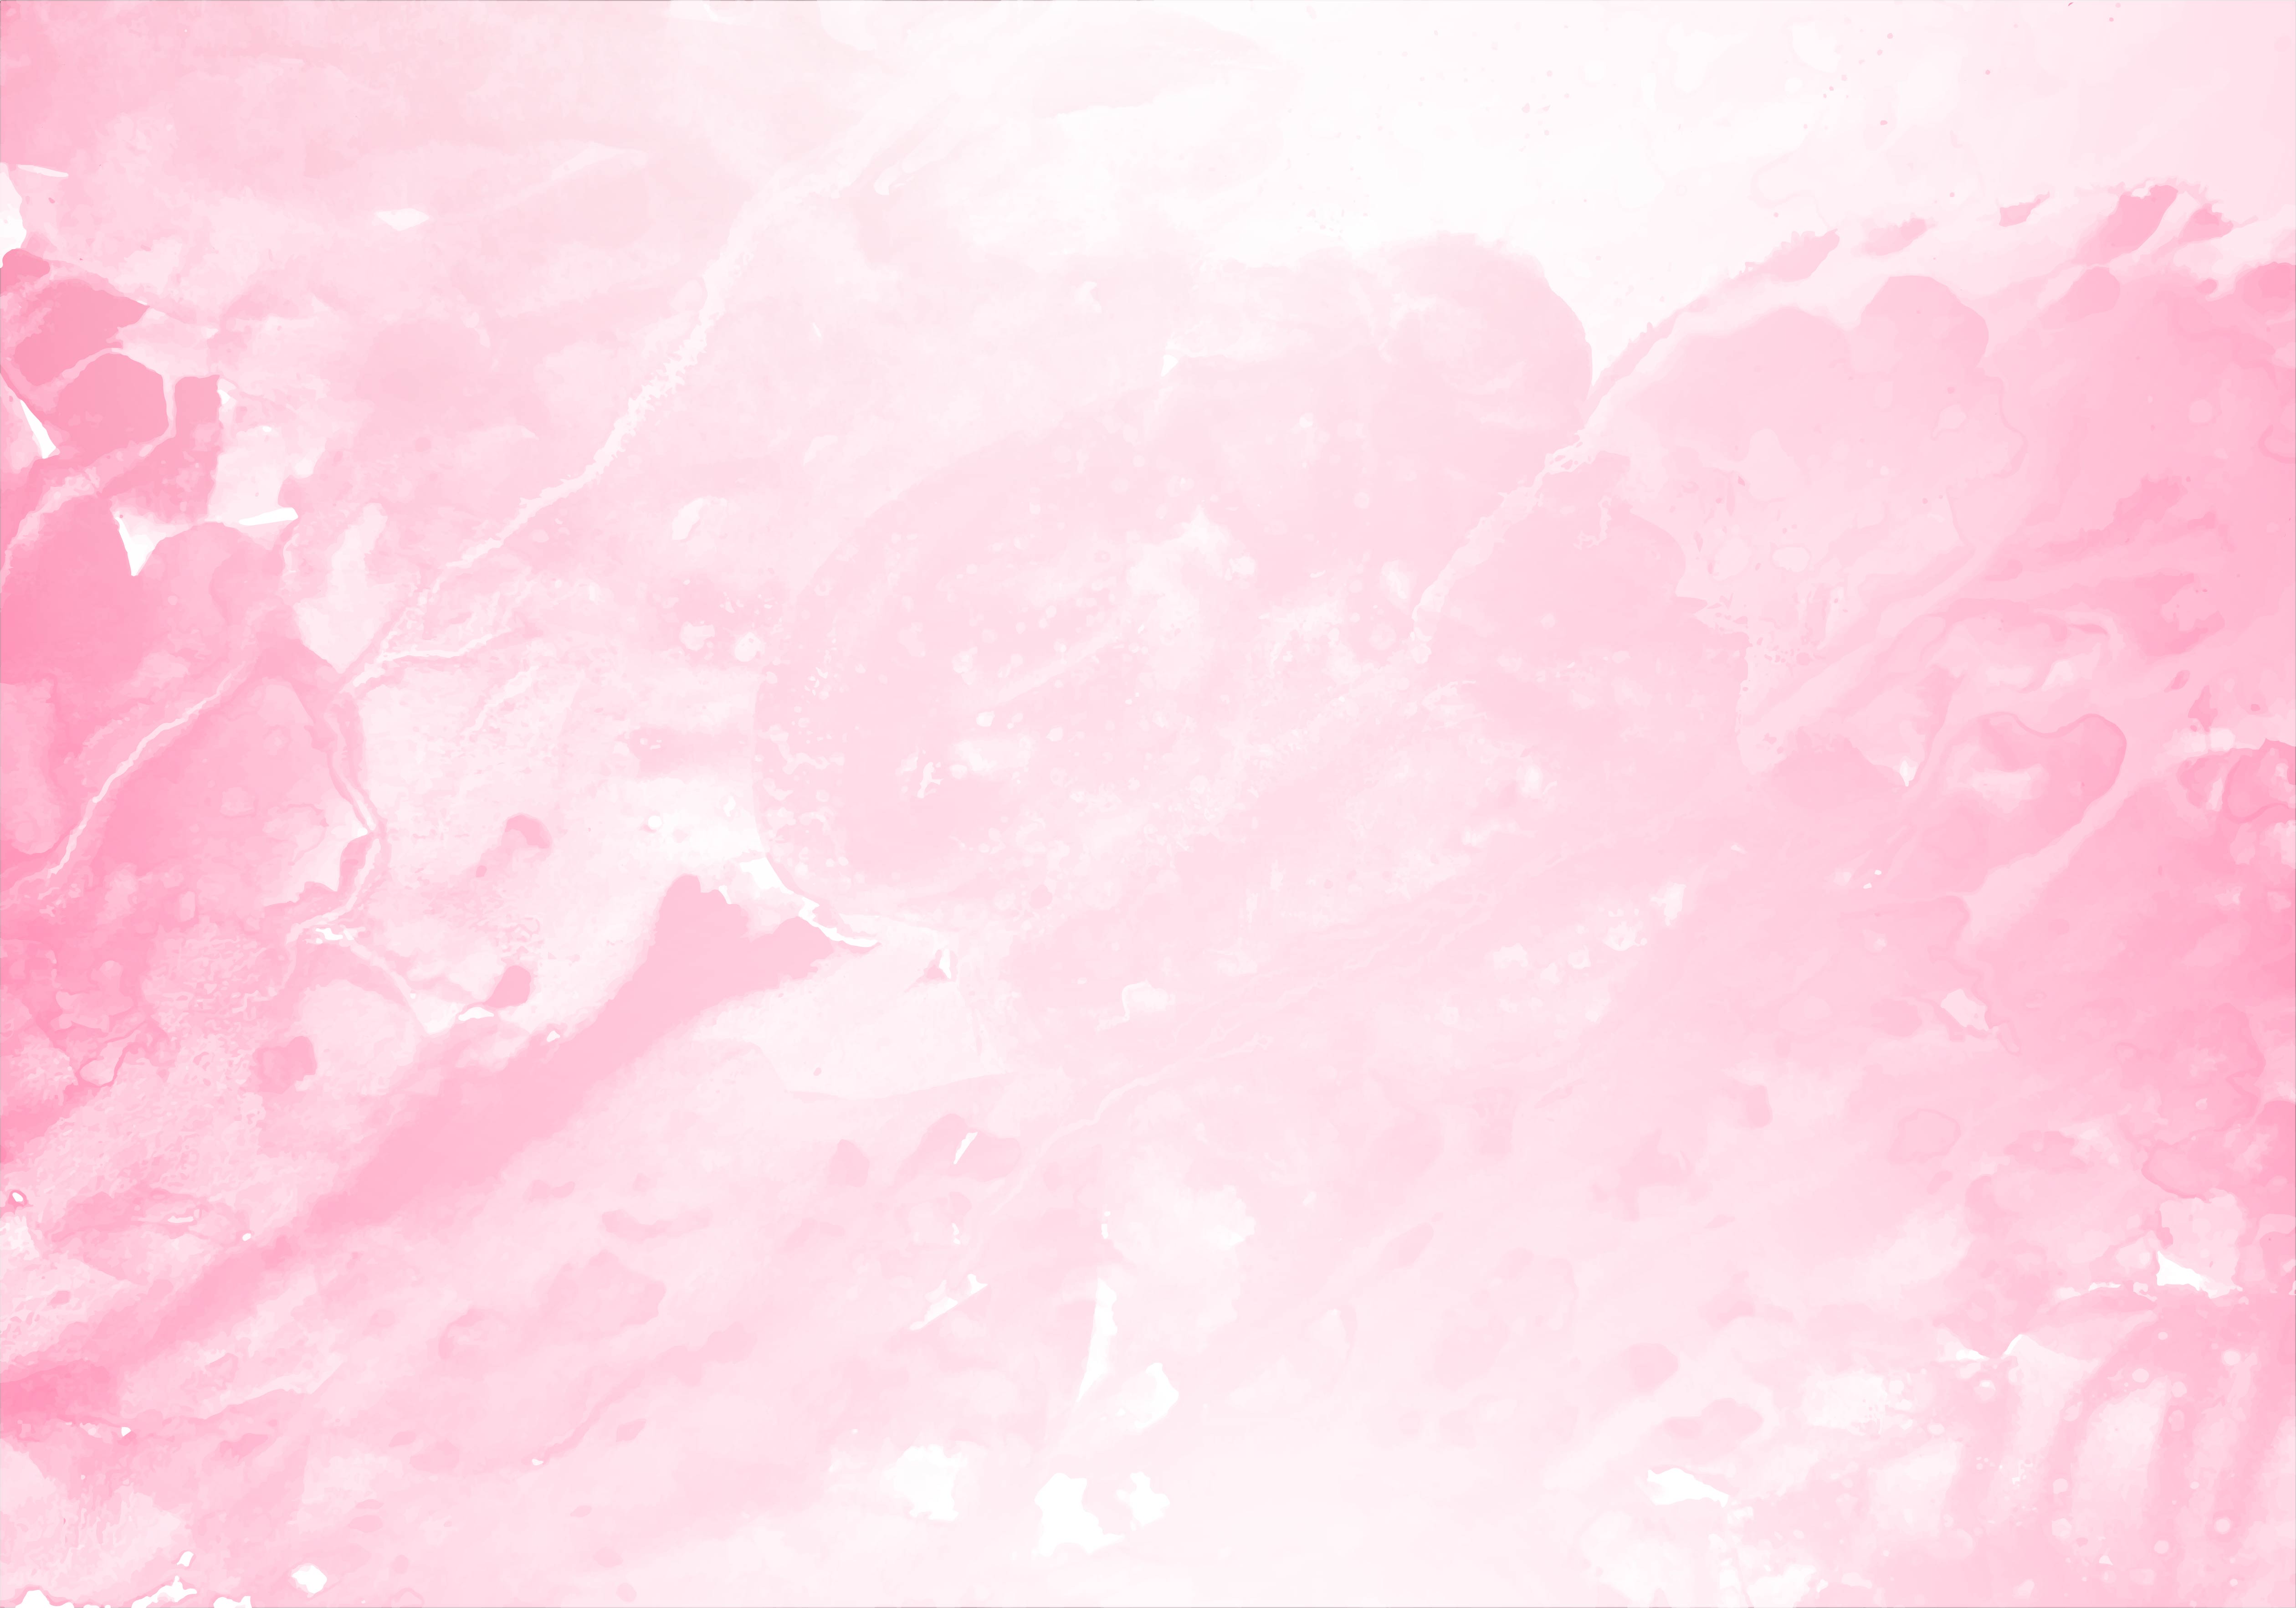 Download Abstract light pink splash watercolor texture - Download Free Vectors, Clipart Graphics & Vector Art